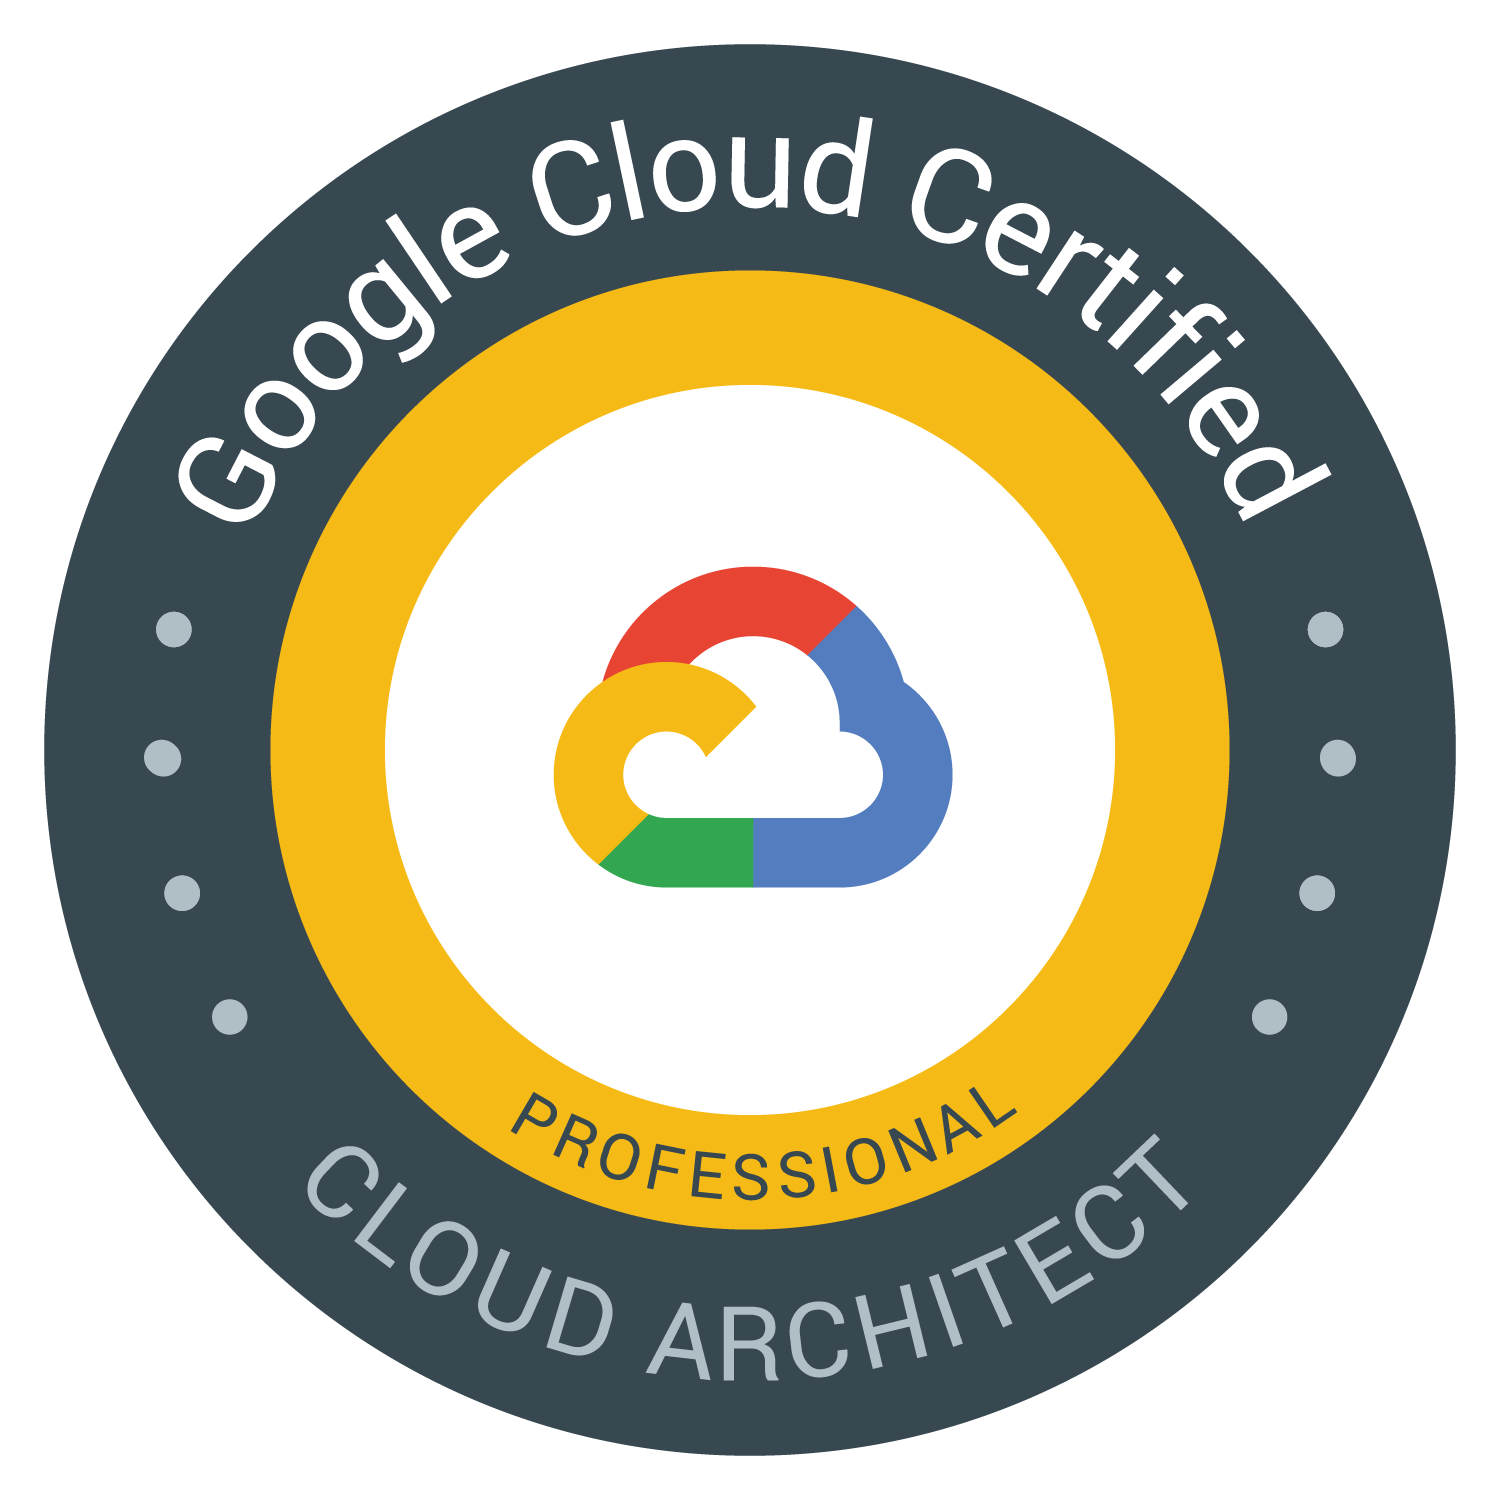 Google Cloud certified